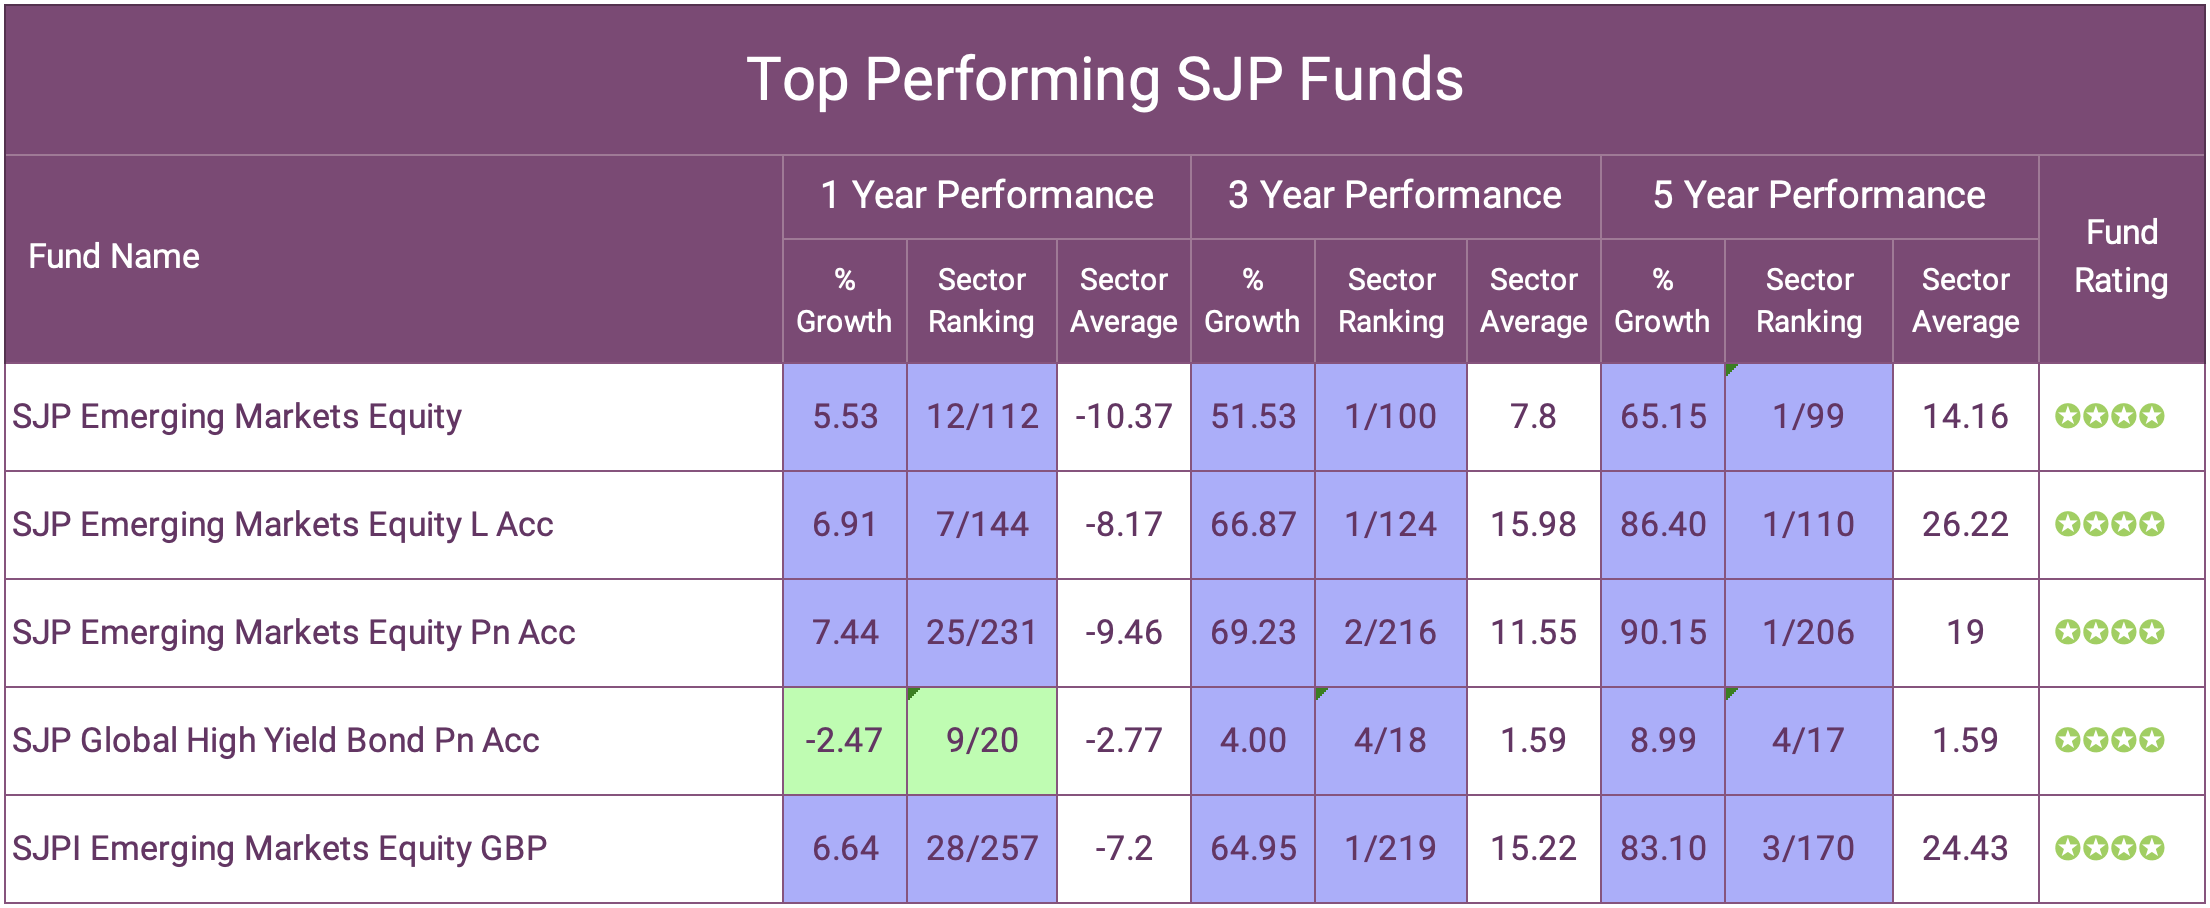 Top Performing SJP Funds